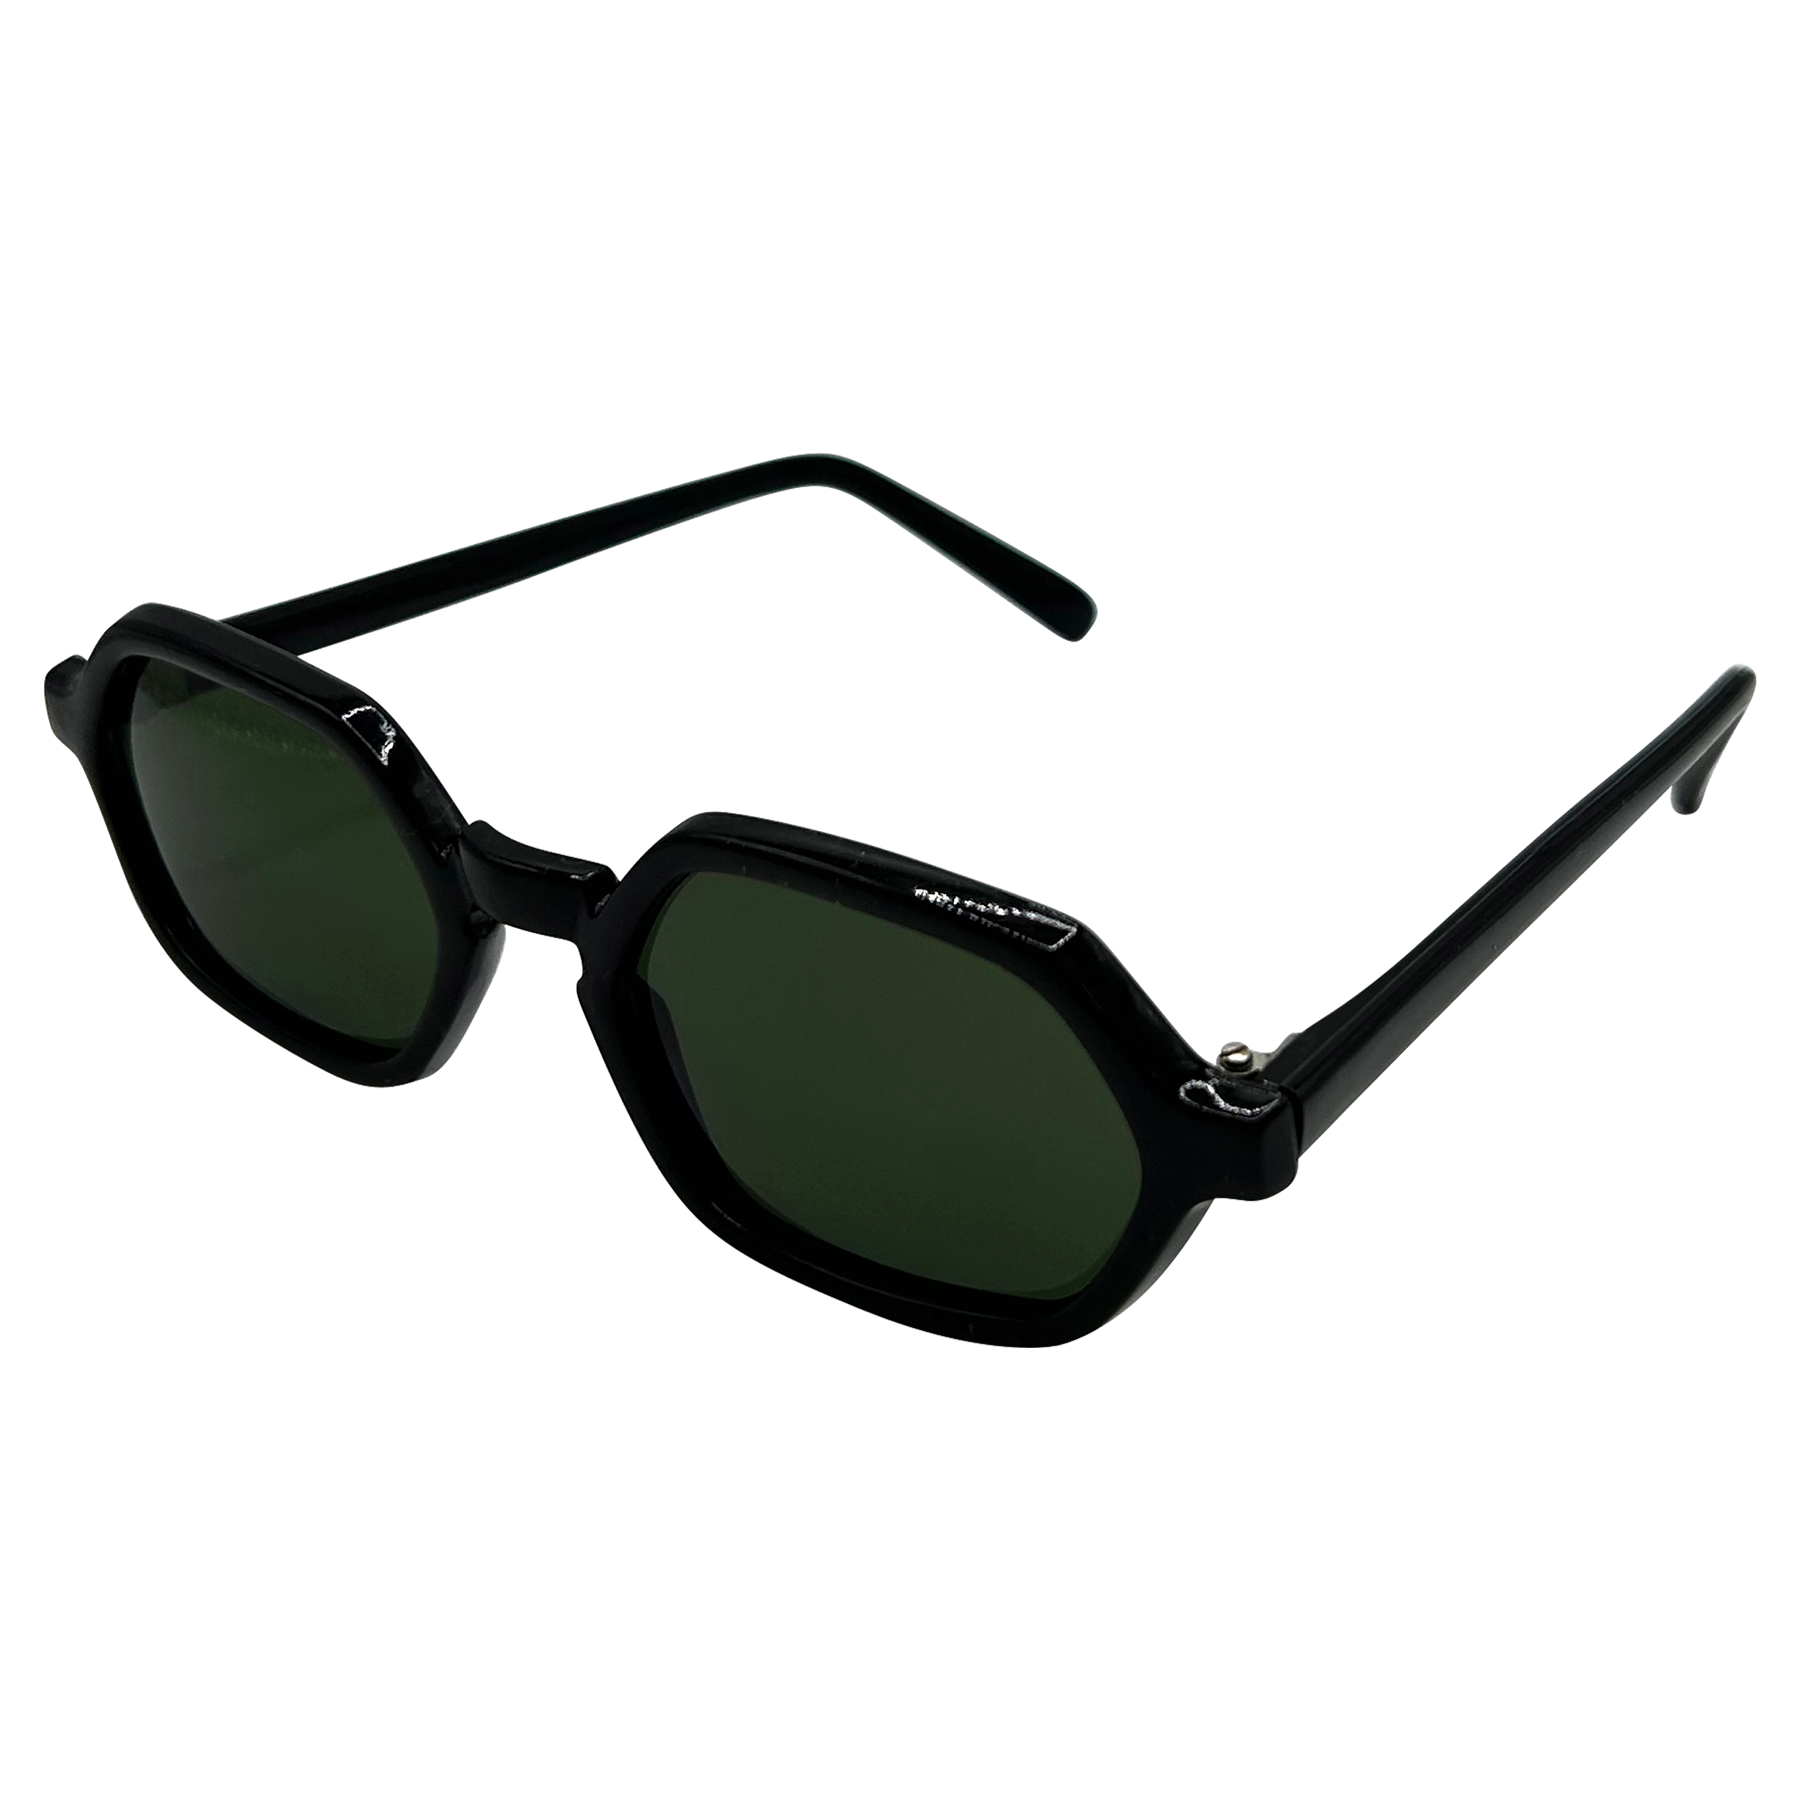 THEORY Classic 90s Sunglasses